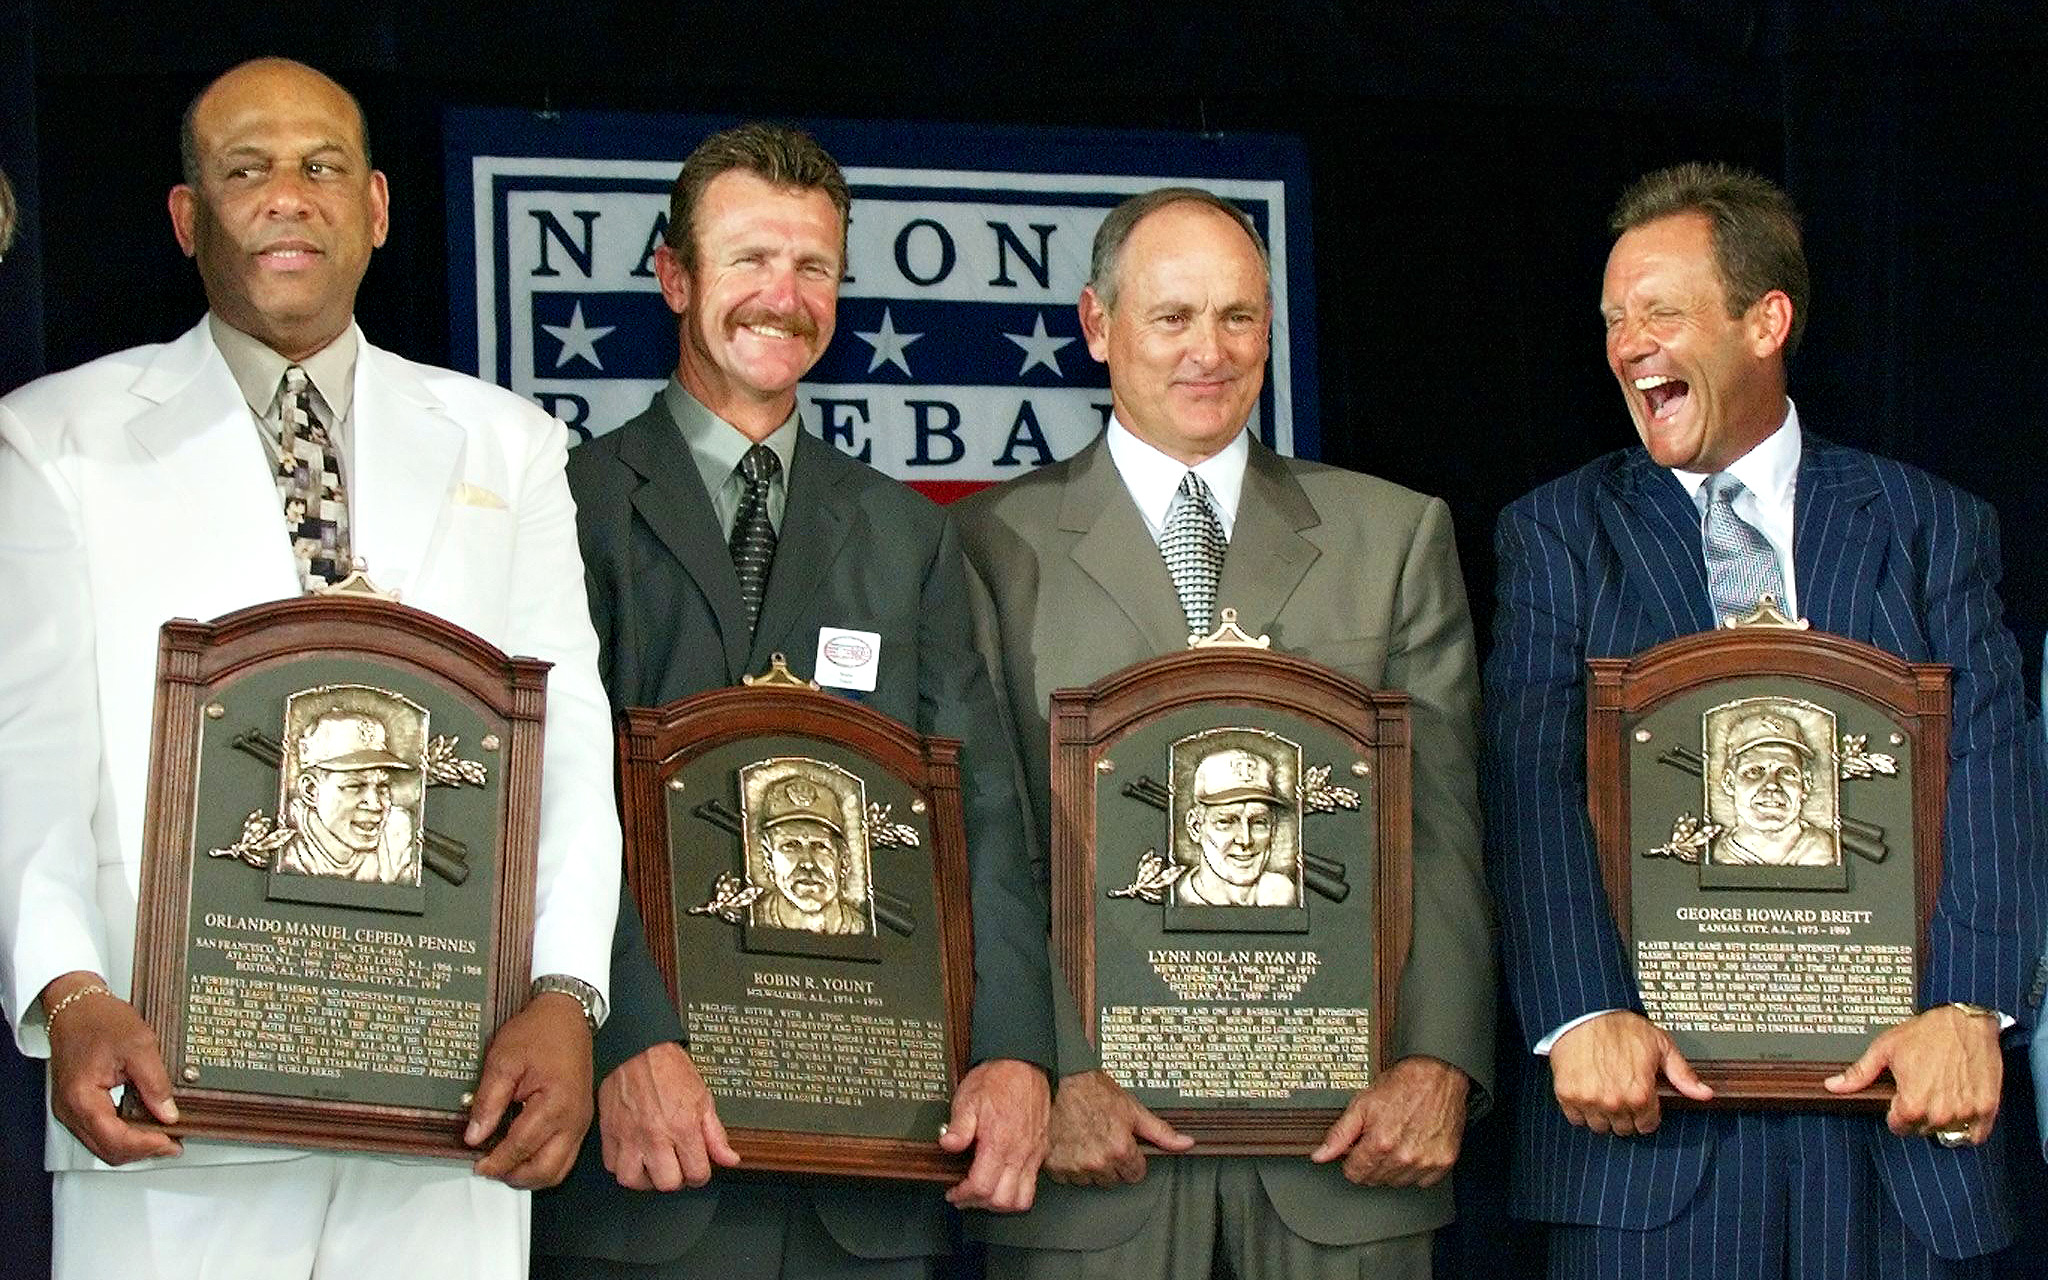 Nolan Ryan New York Mets 1999 Hall of Fame Induction 8x10